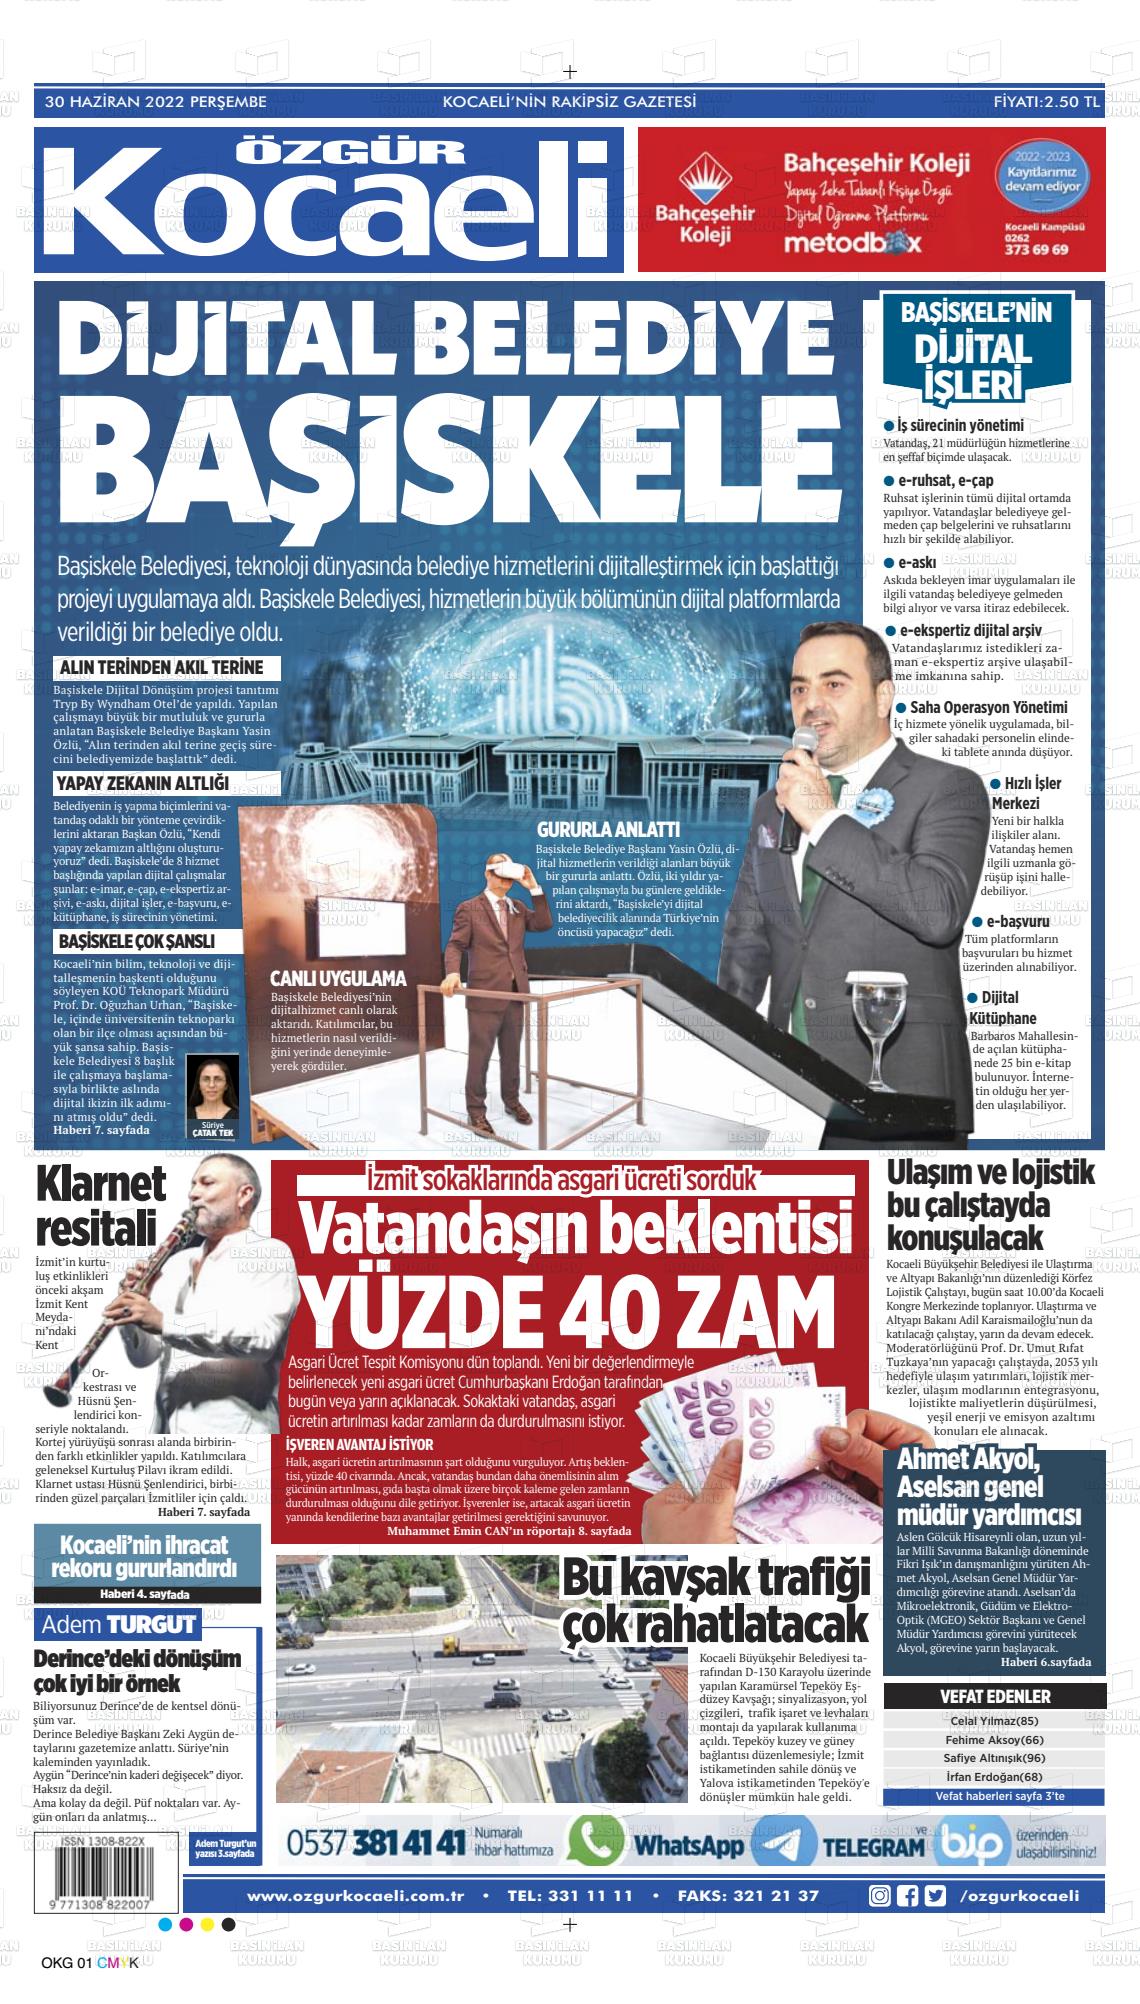 02 Temmuz 2022 Özgür Kocaeli Gazete Manşeti